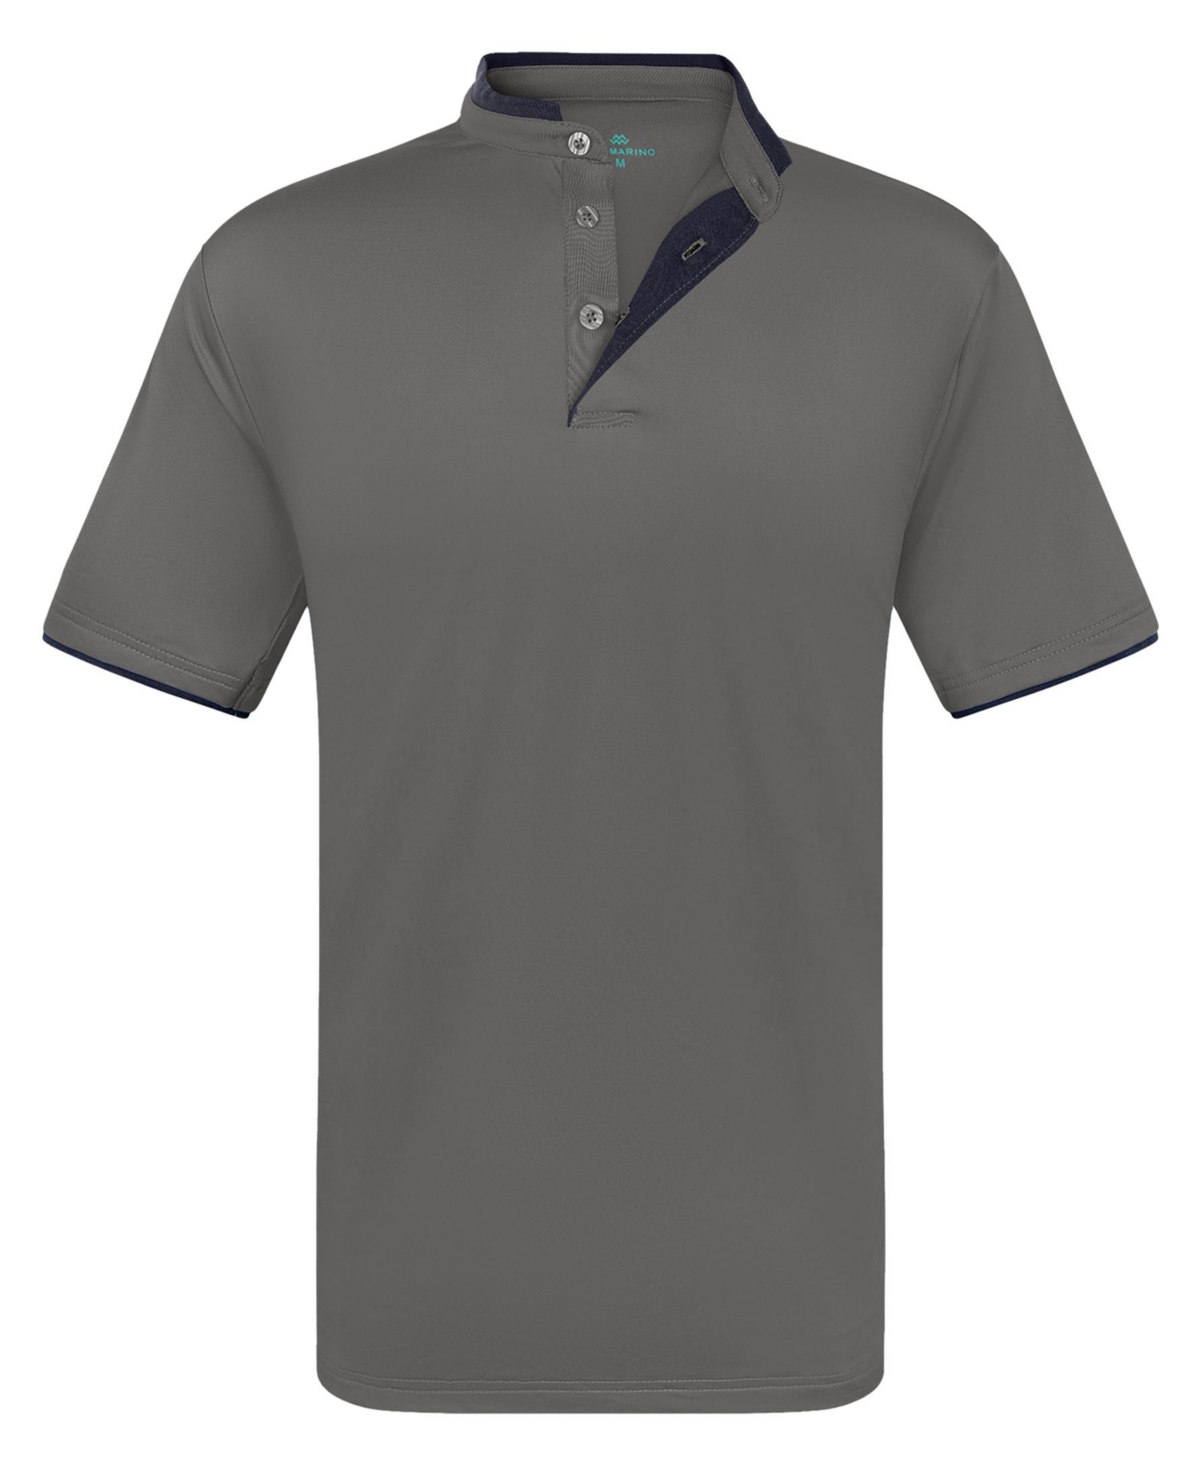 Men's Short Sleeve Henley Polo Shirt with Contrast-Trim - Black melange